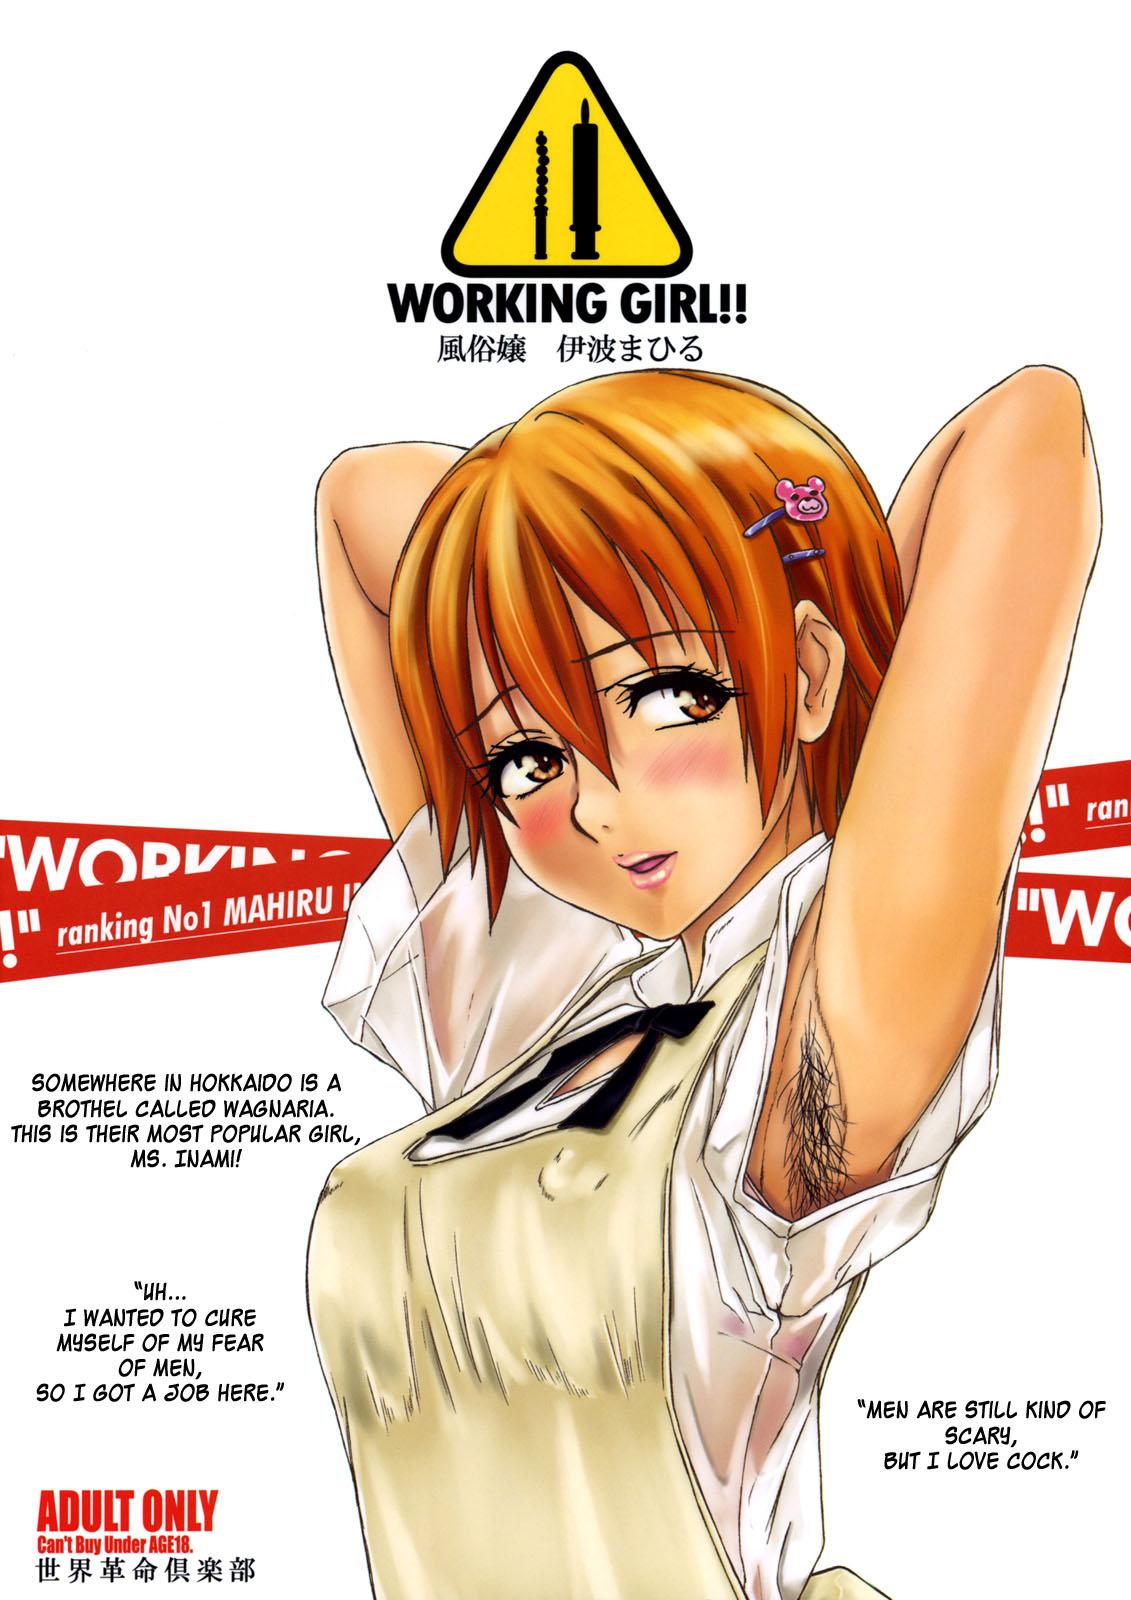 WORKING GIRL!! ranking No 1 Fuuzokujou Inami Mahiru 37